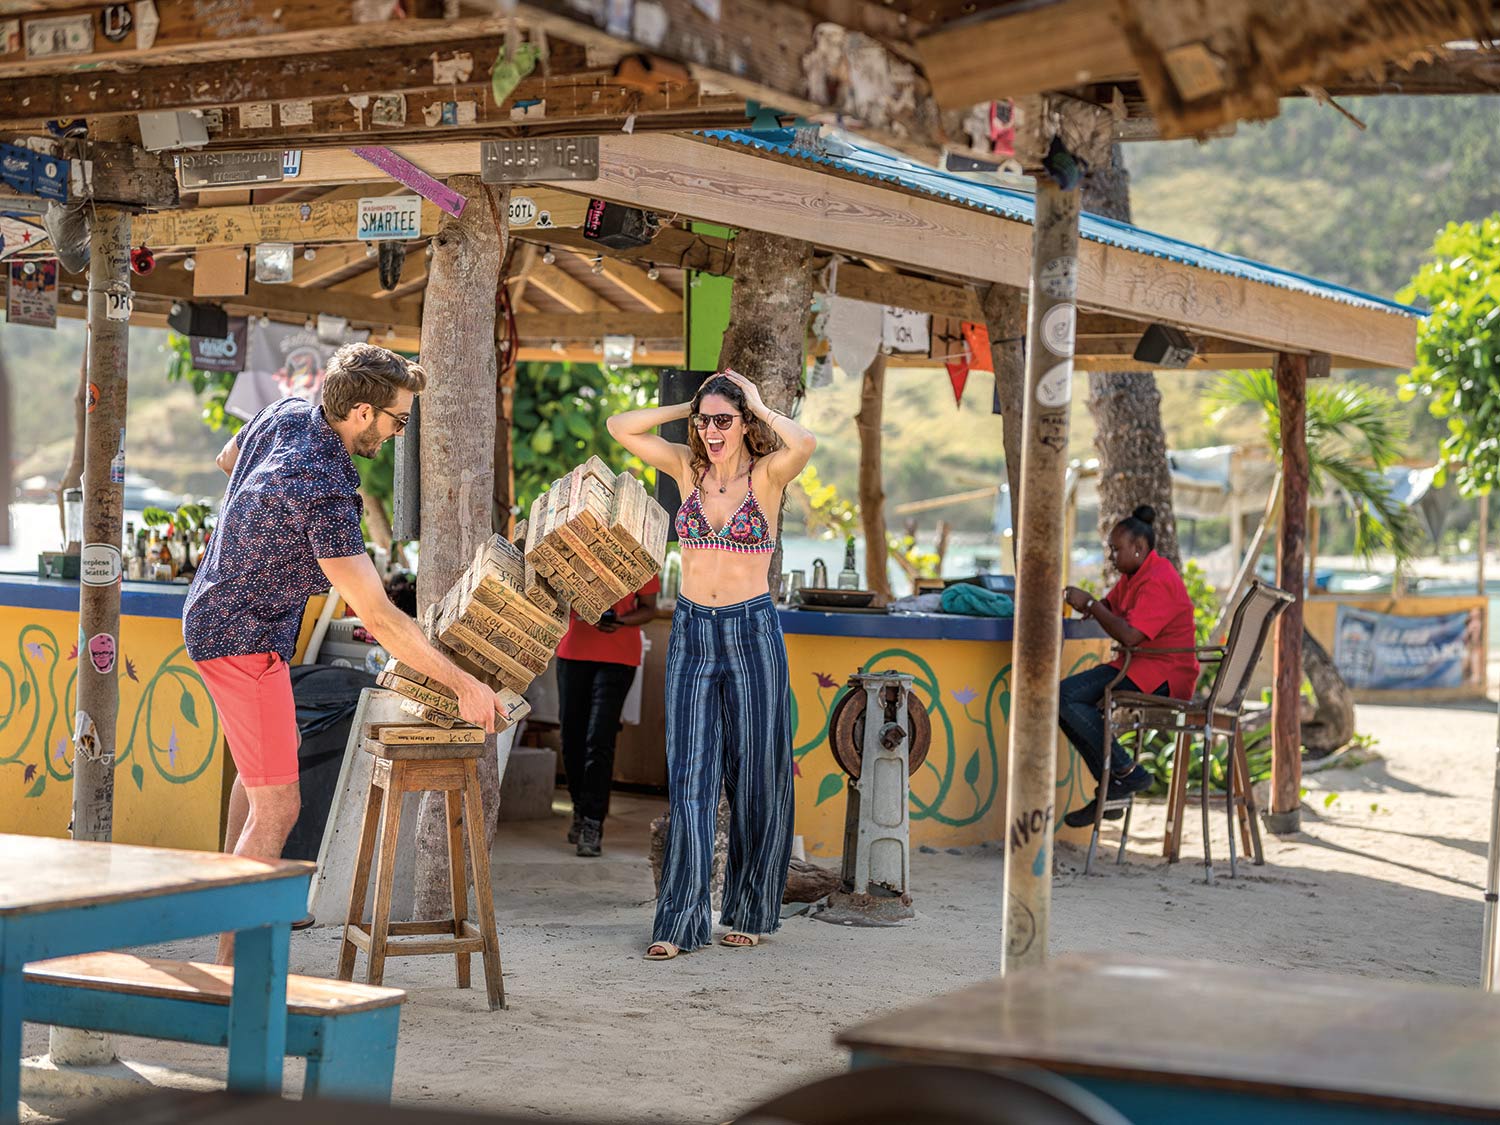 Two people play Jenga at a beach resort bar.